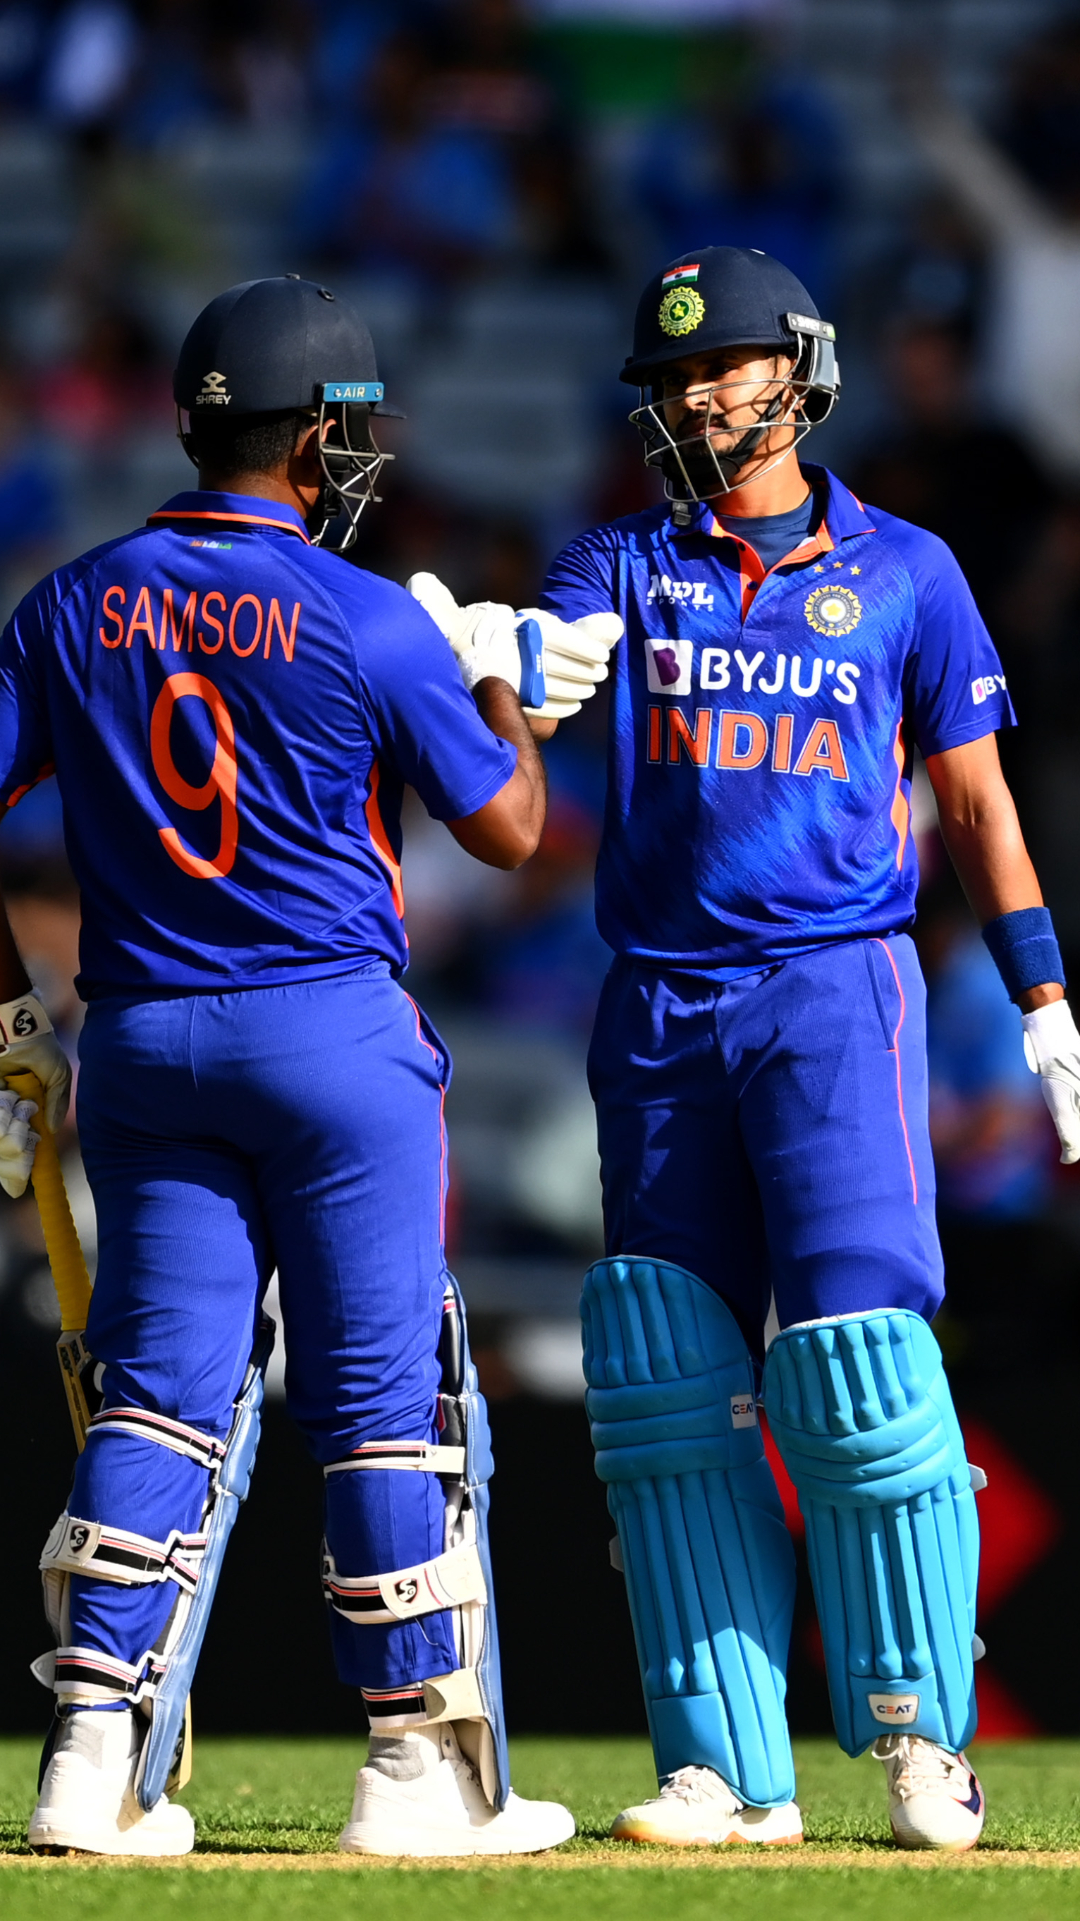 IND vs NZ: Featuring Shreyas Iyer and Shikhar Dhawan, India's top run scorers in ODI series vs New Zealand